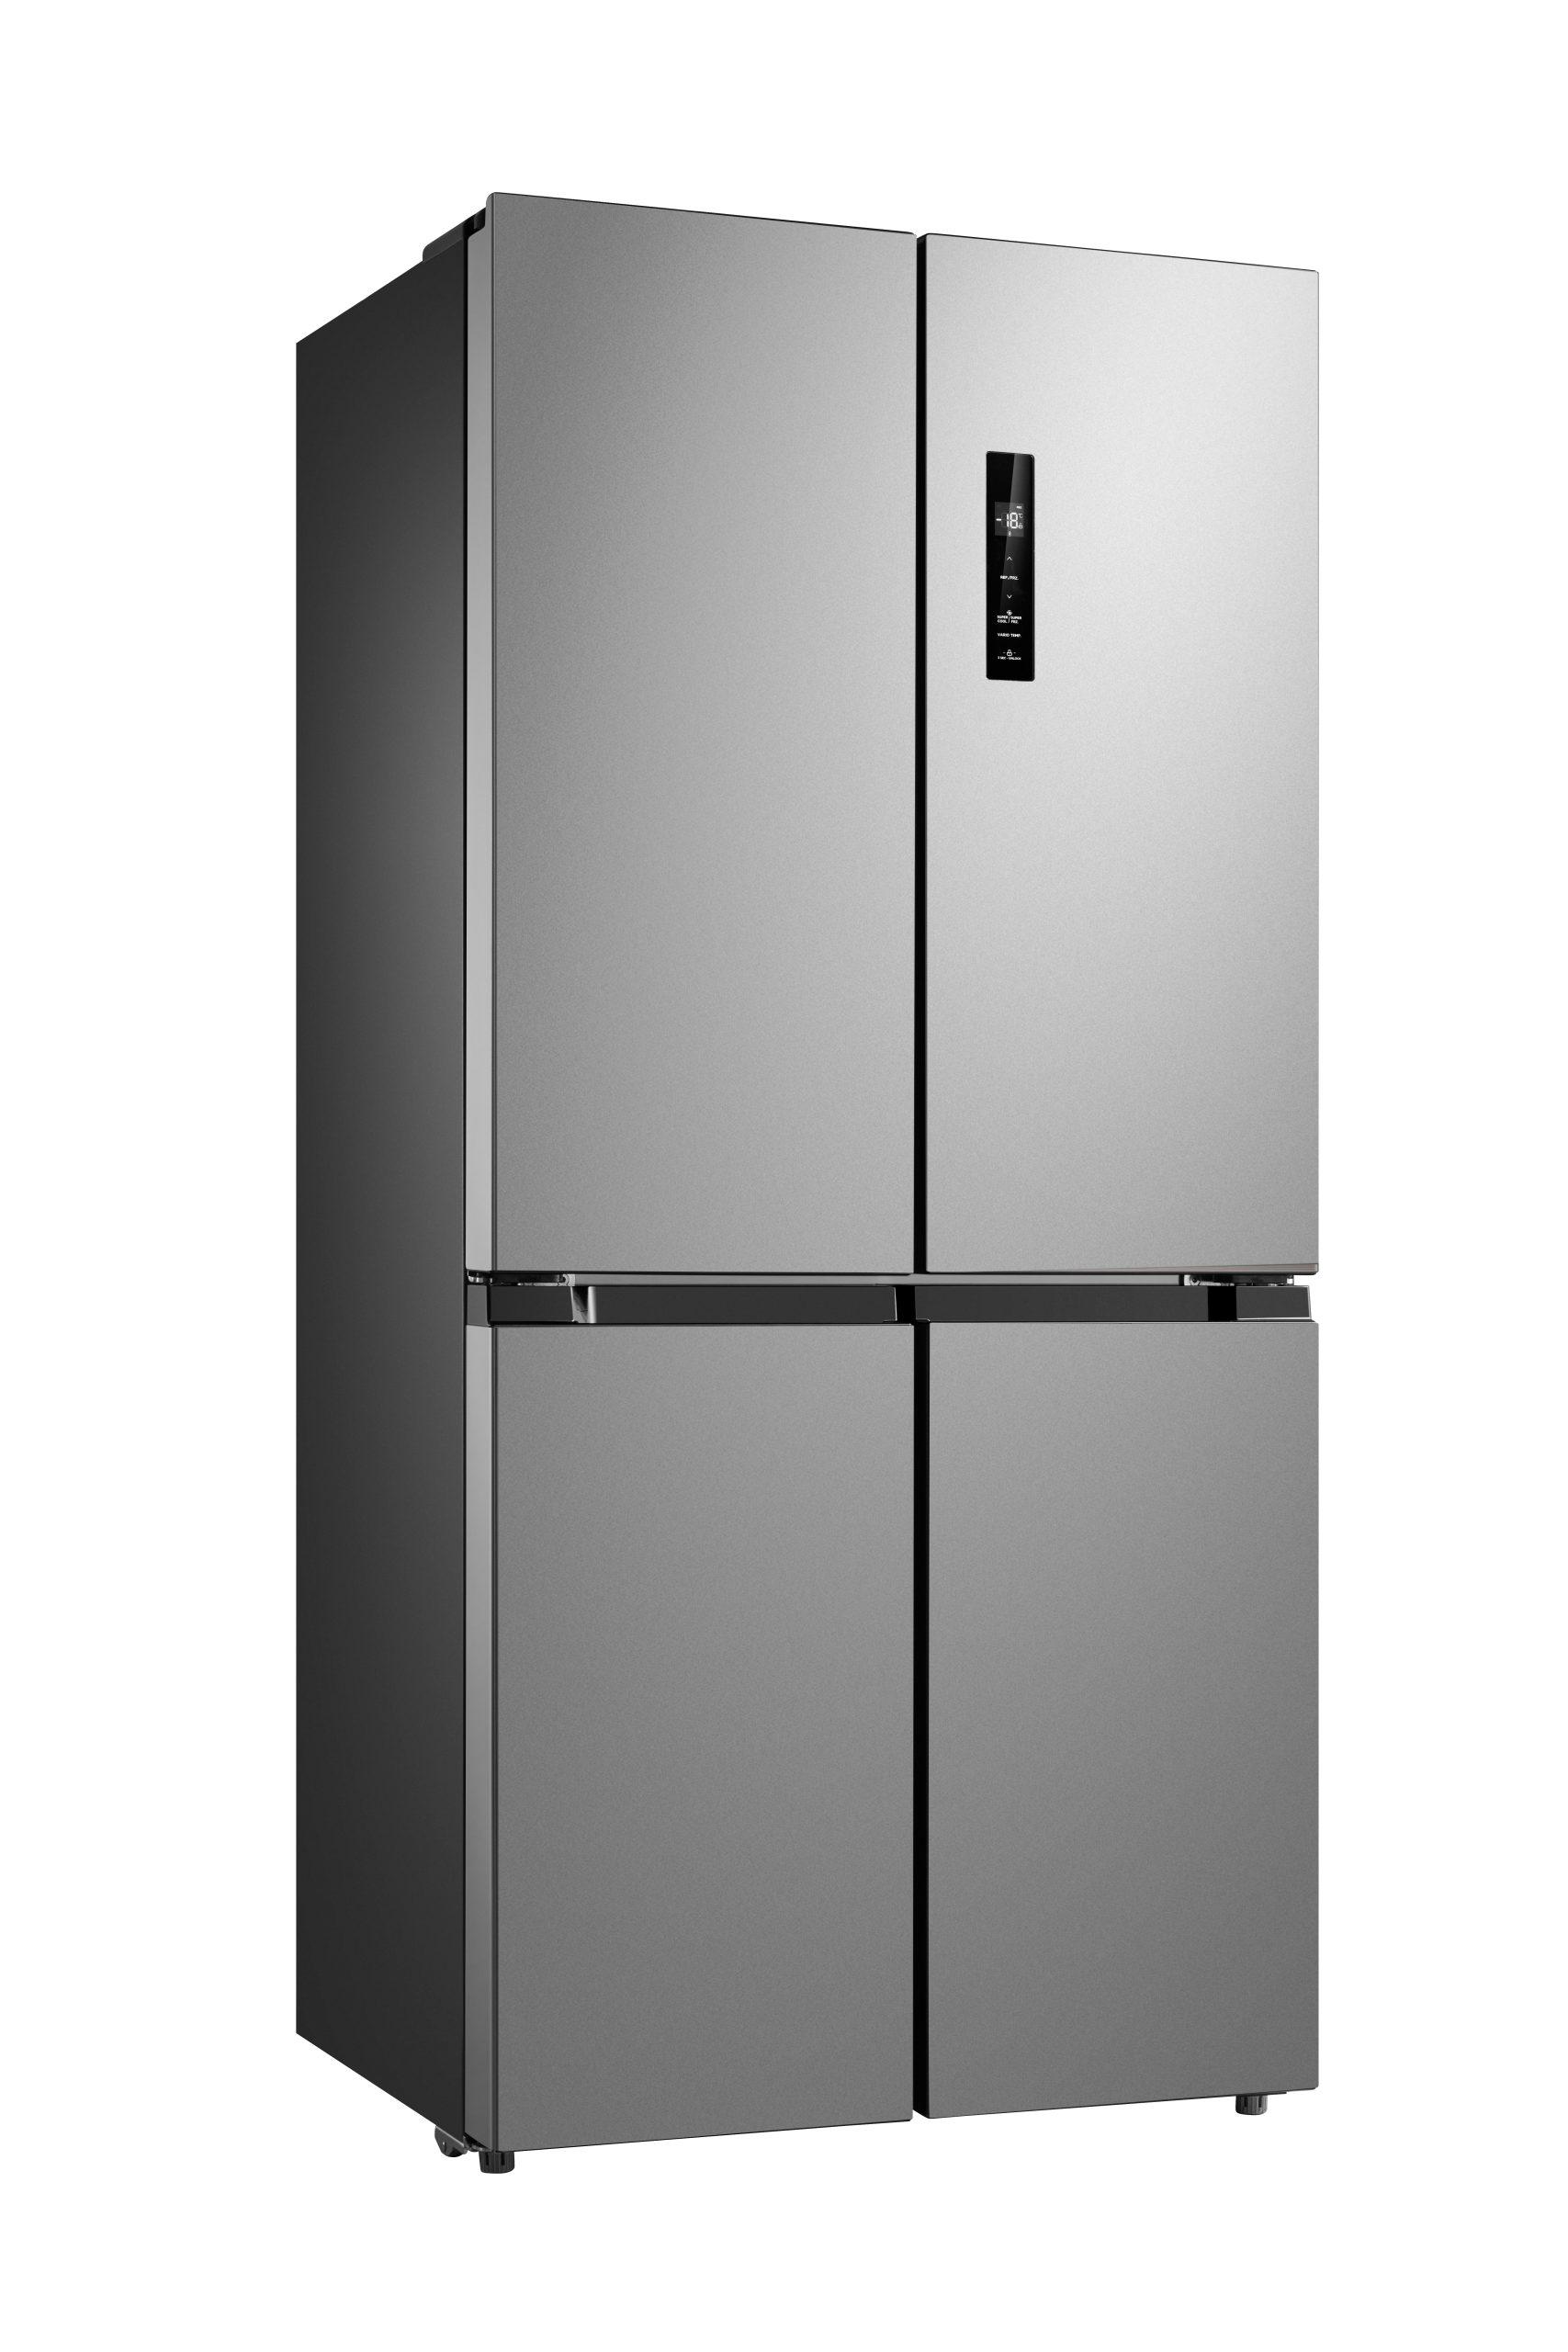 Mika Refrigerator, 474L, No Frost, 4 Door, With Inverter compressor, Digital display, Stainless Steel - MRNF4D474DXV